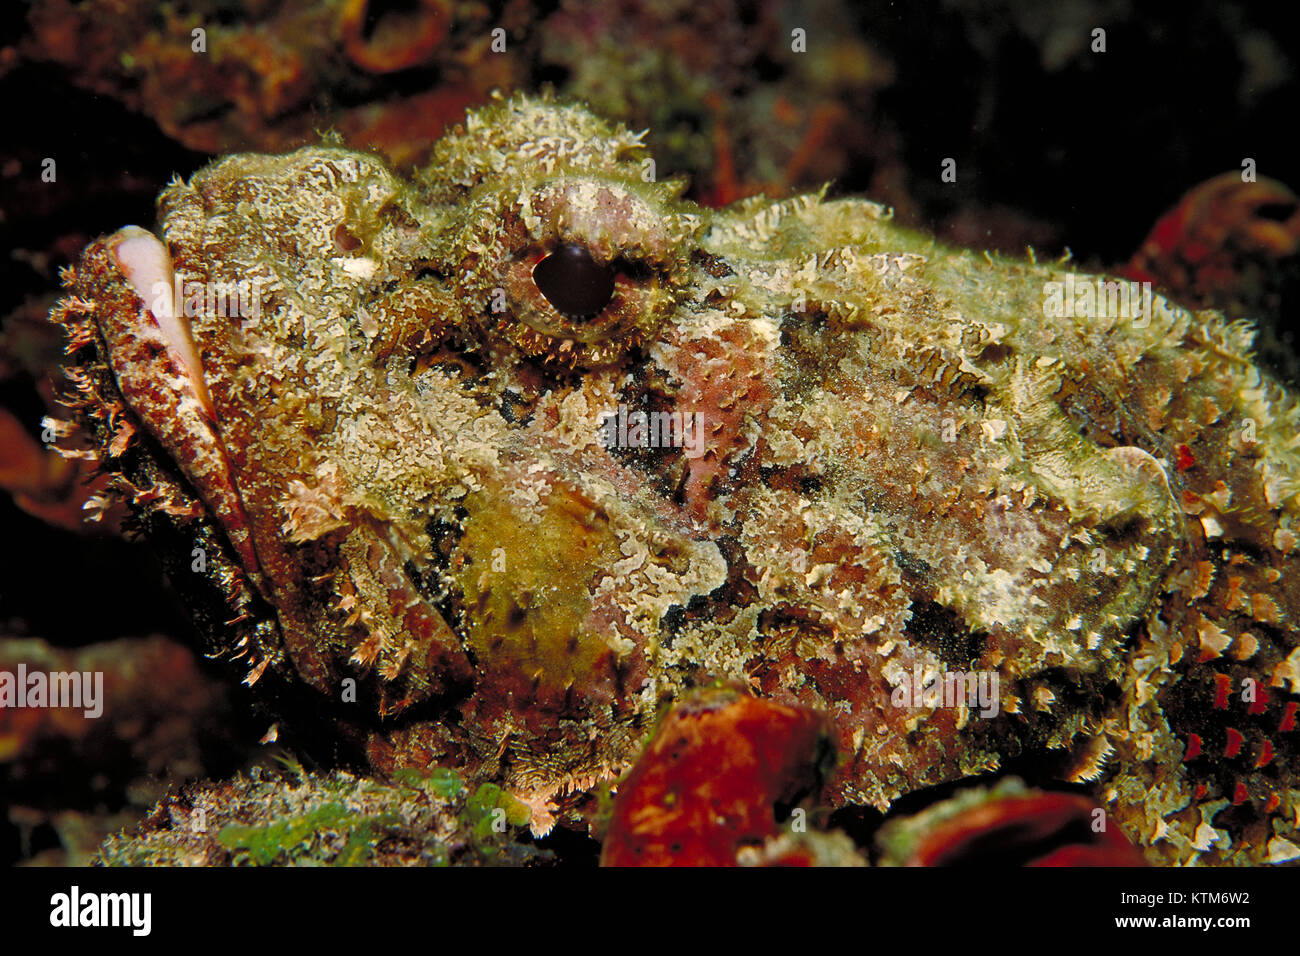 A well camouflaged Scorpionfish, Scorpaena plumieri underwater on a Florida Keys reef. Stock Photo